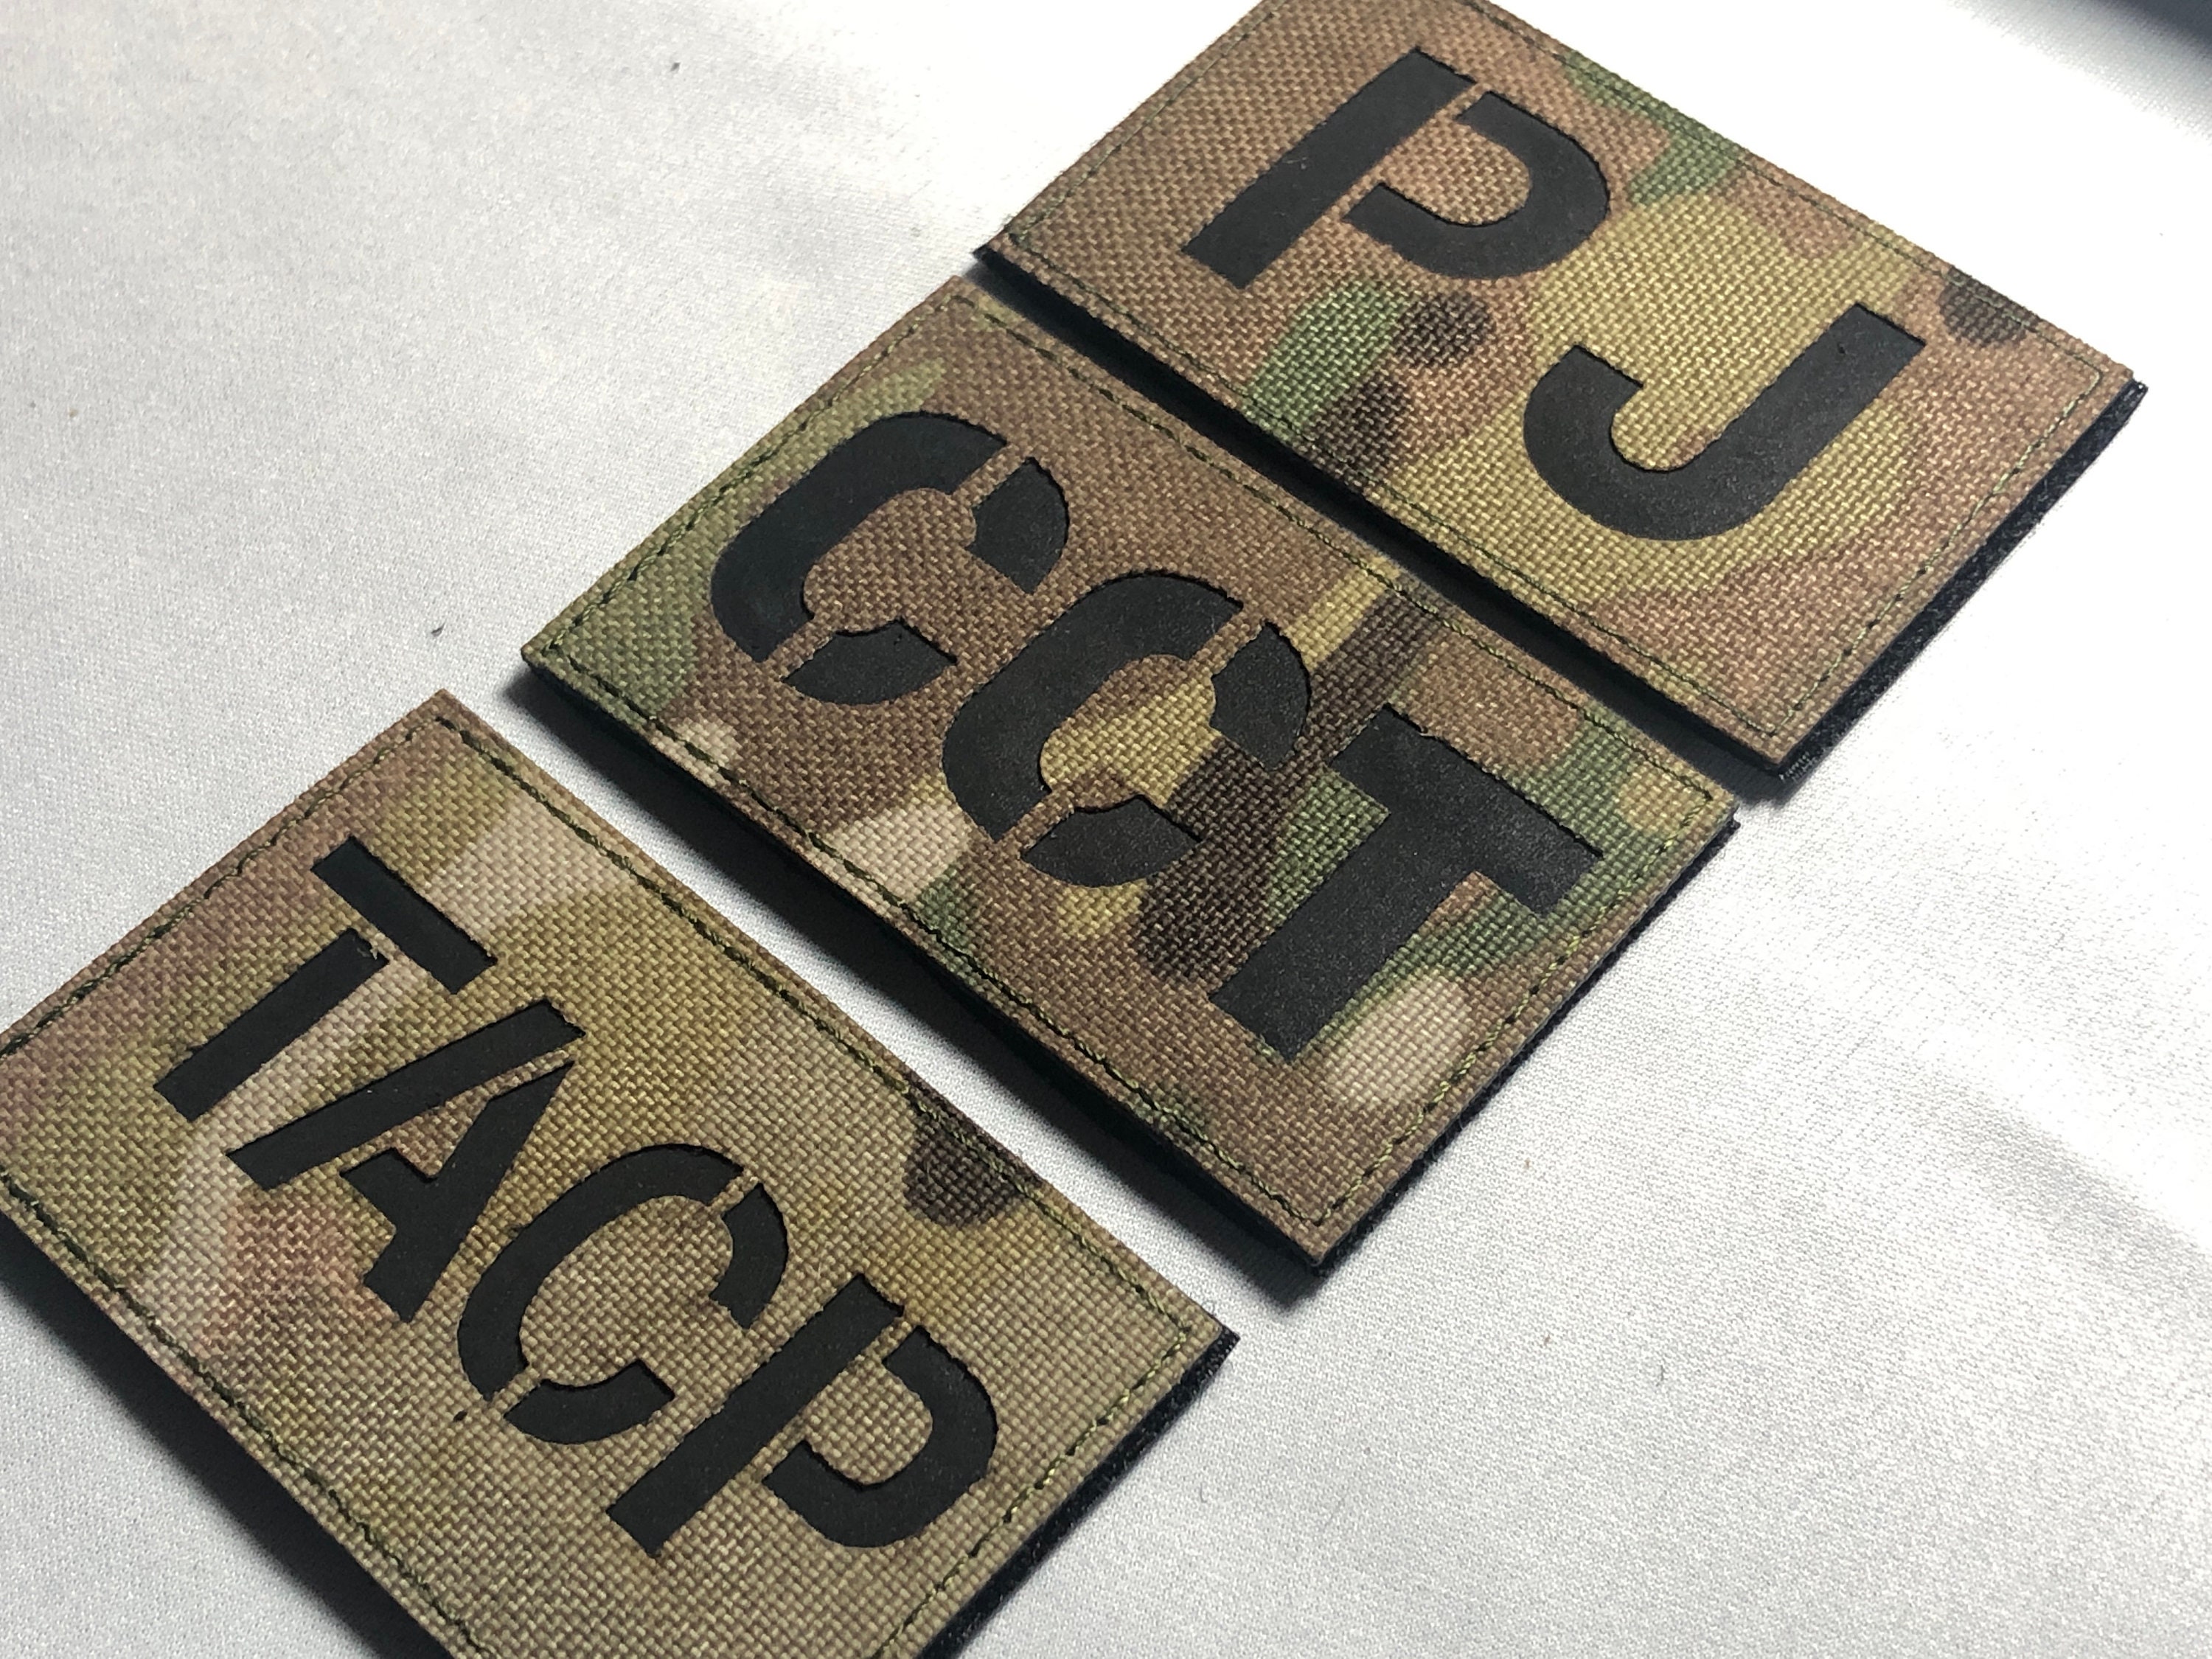 Vintage ARMY PATCHES Military Shoulder Insignia Uniform U.S. Pick a Patch D  